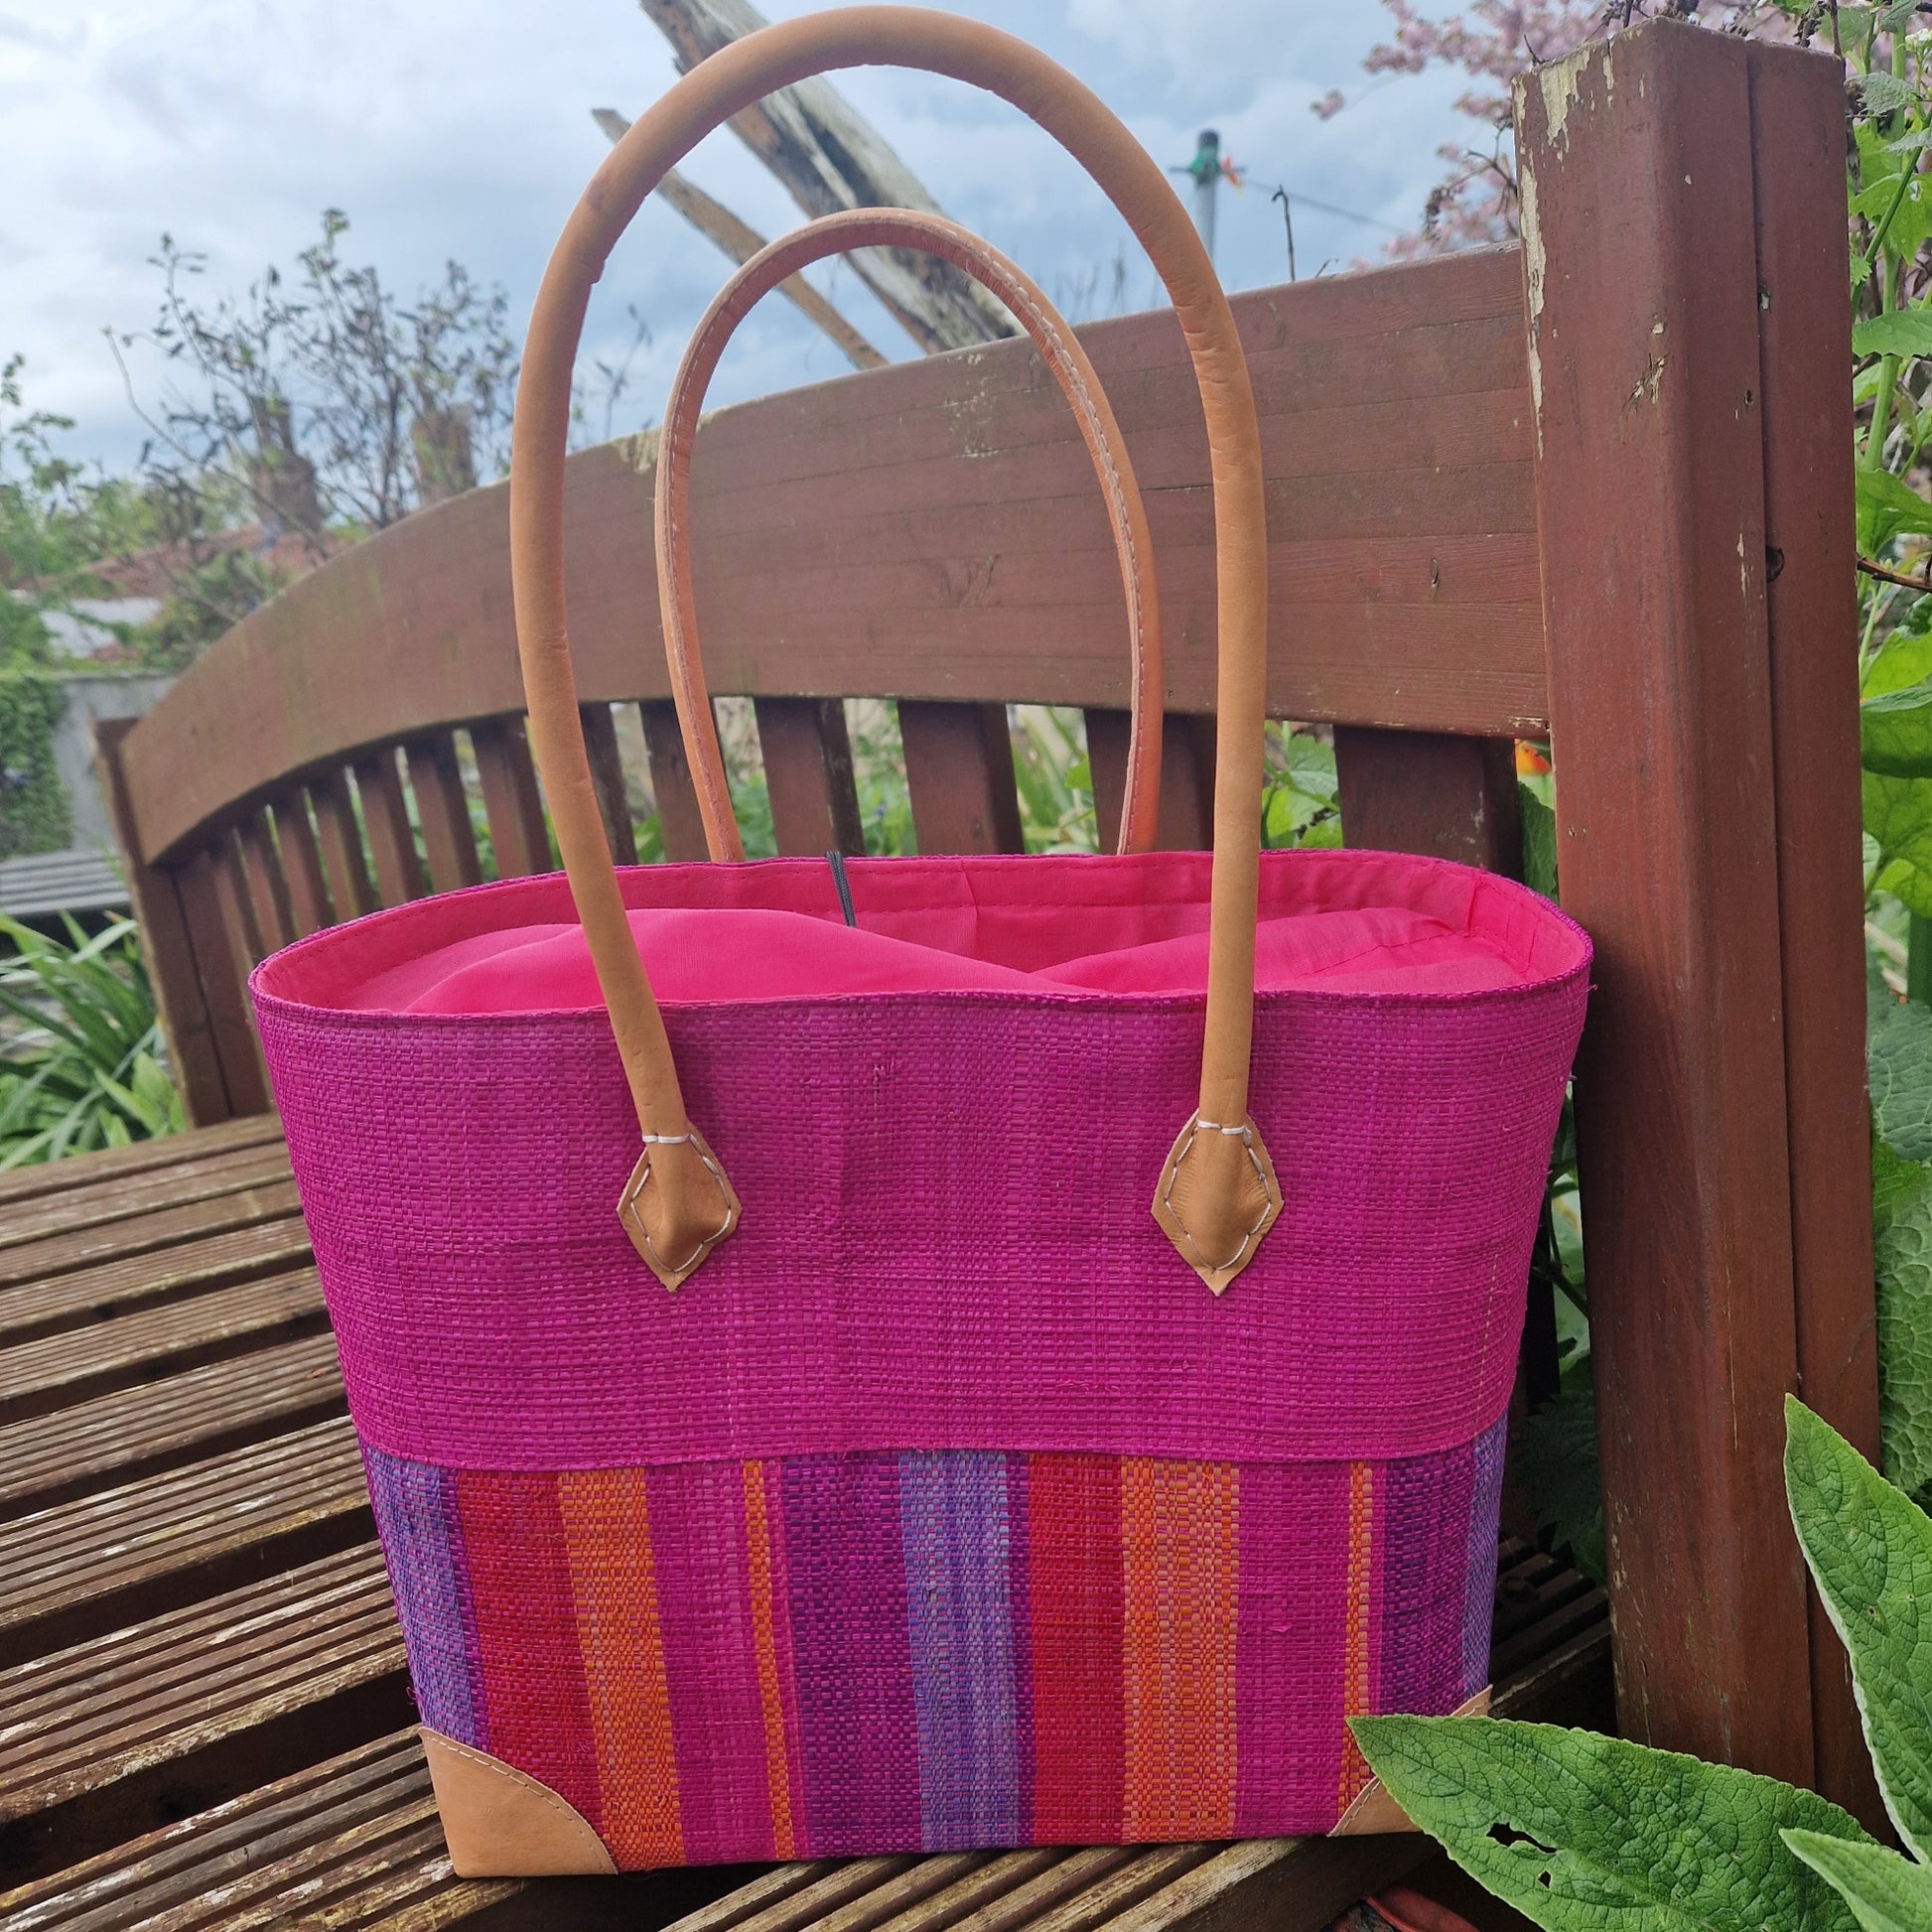 Magenta coloured raffia baskets with bright stripes